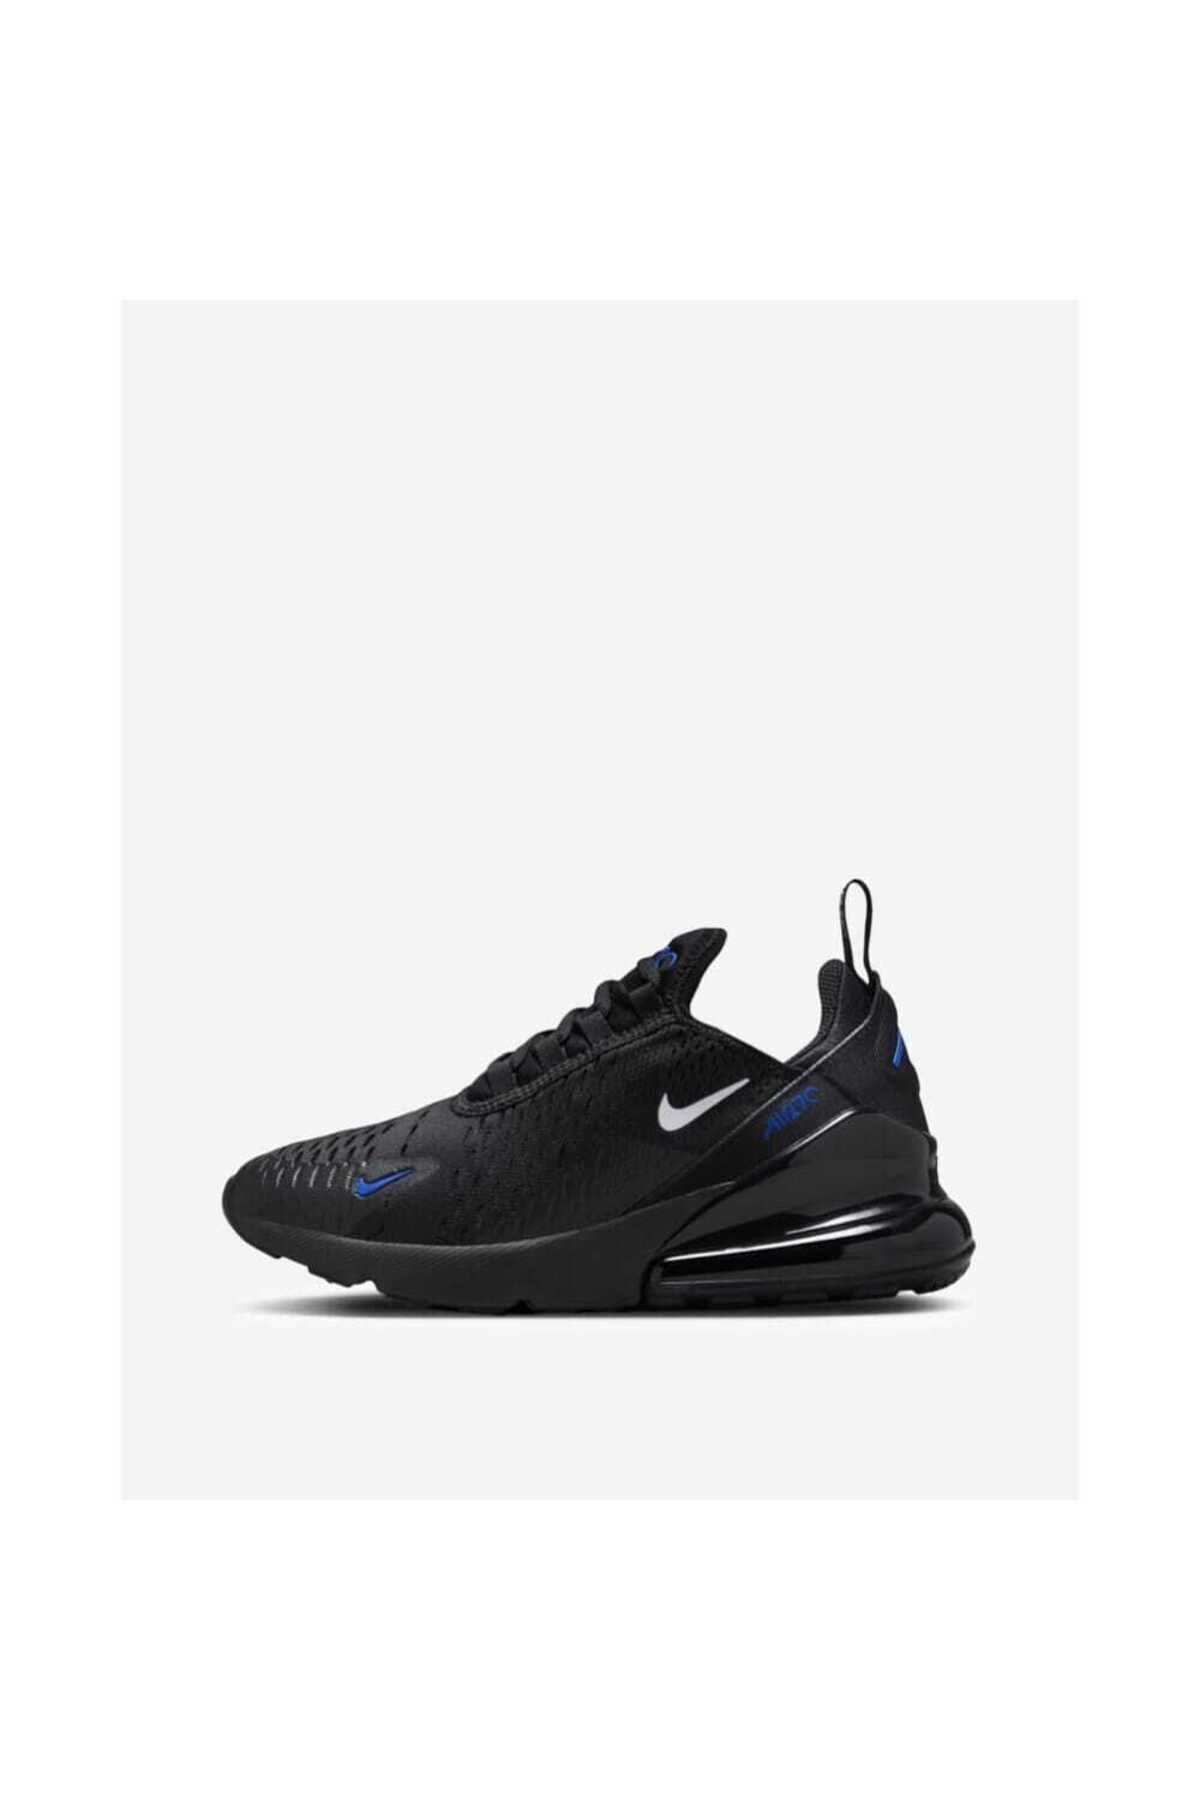 Nike Air Max 270 Black/White-Racer Blue Çocuk Sneaker ayakkabı